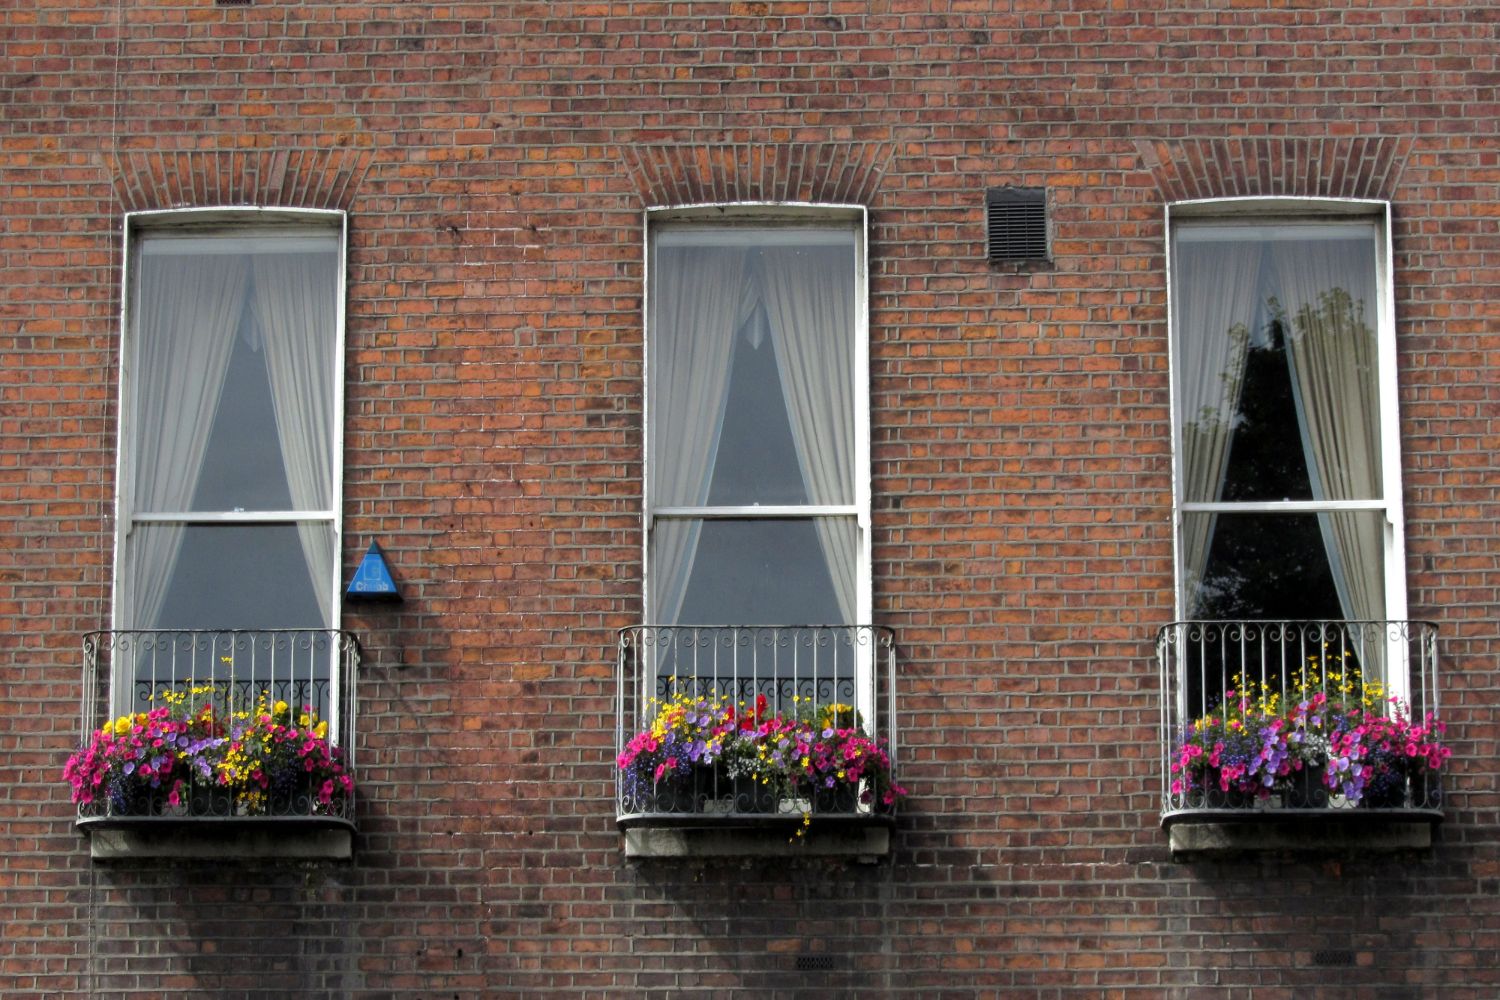 townhouse windows, Parnell Sq